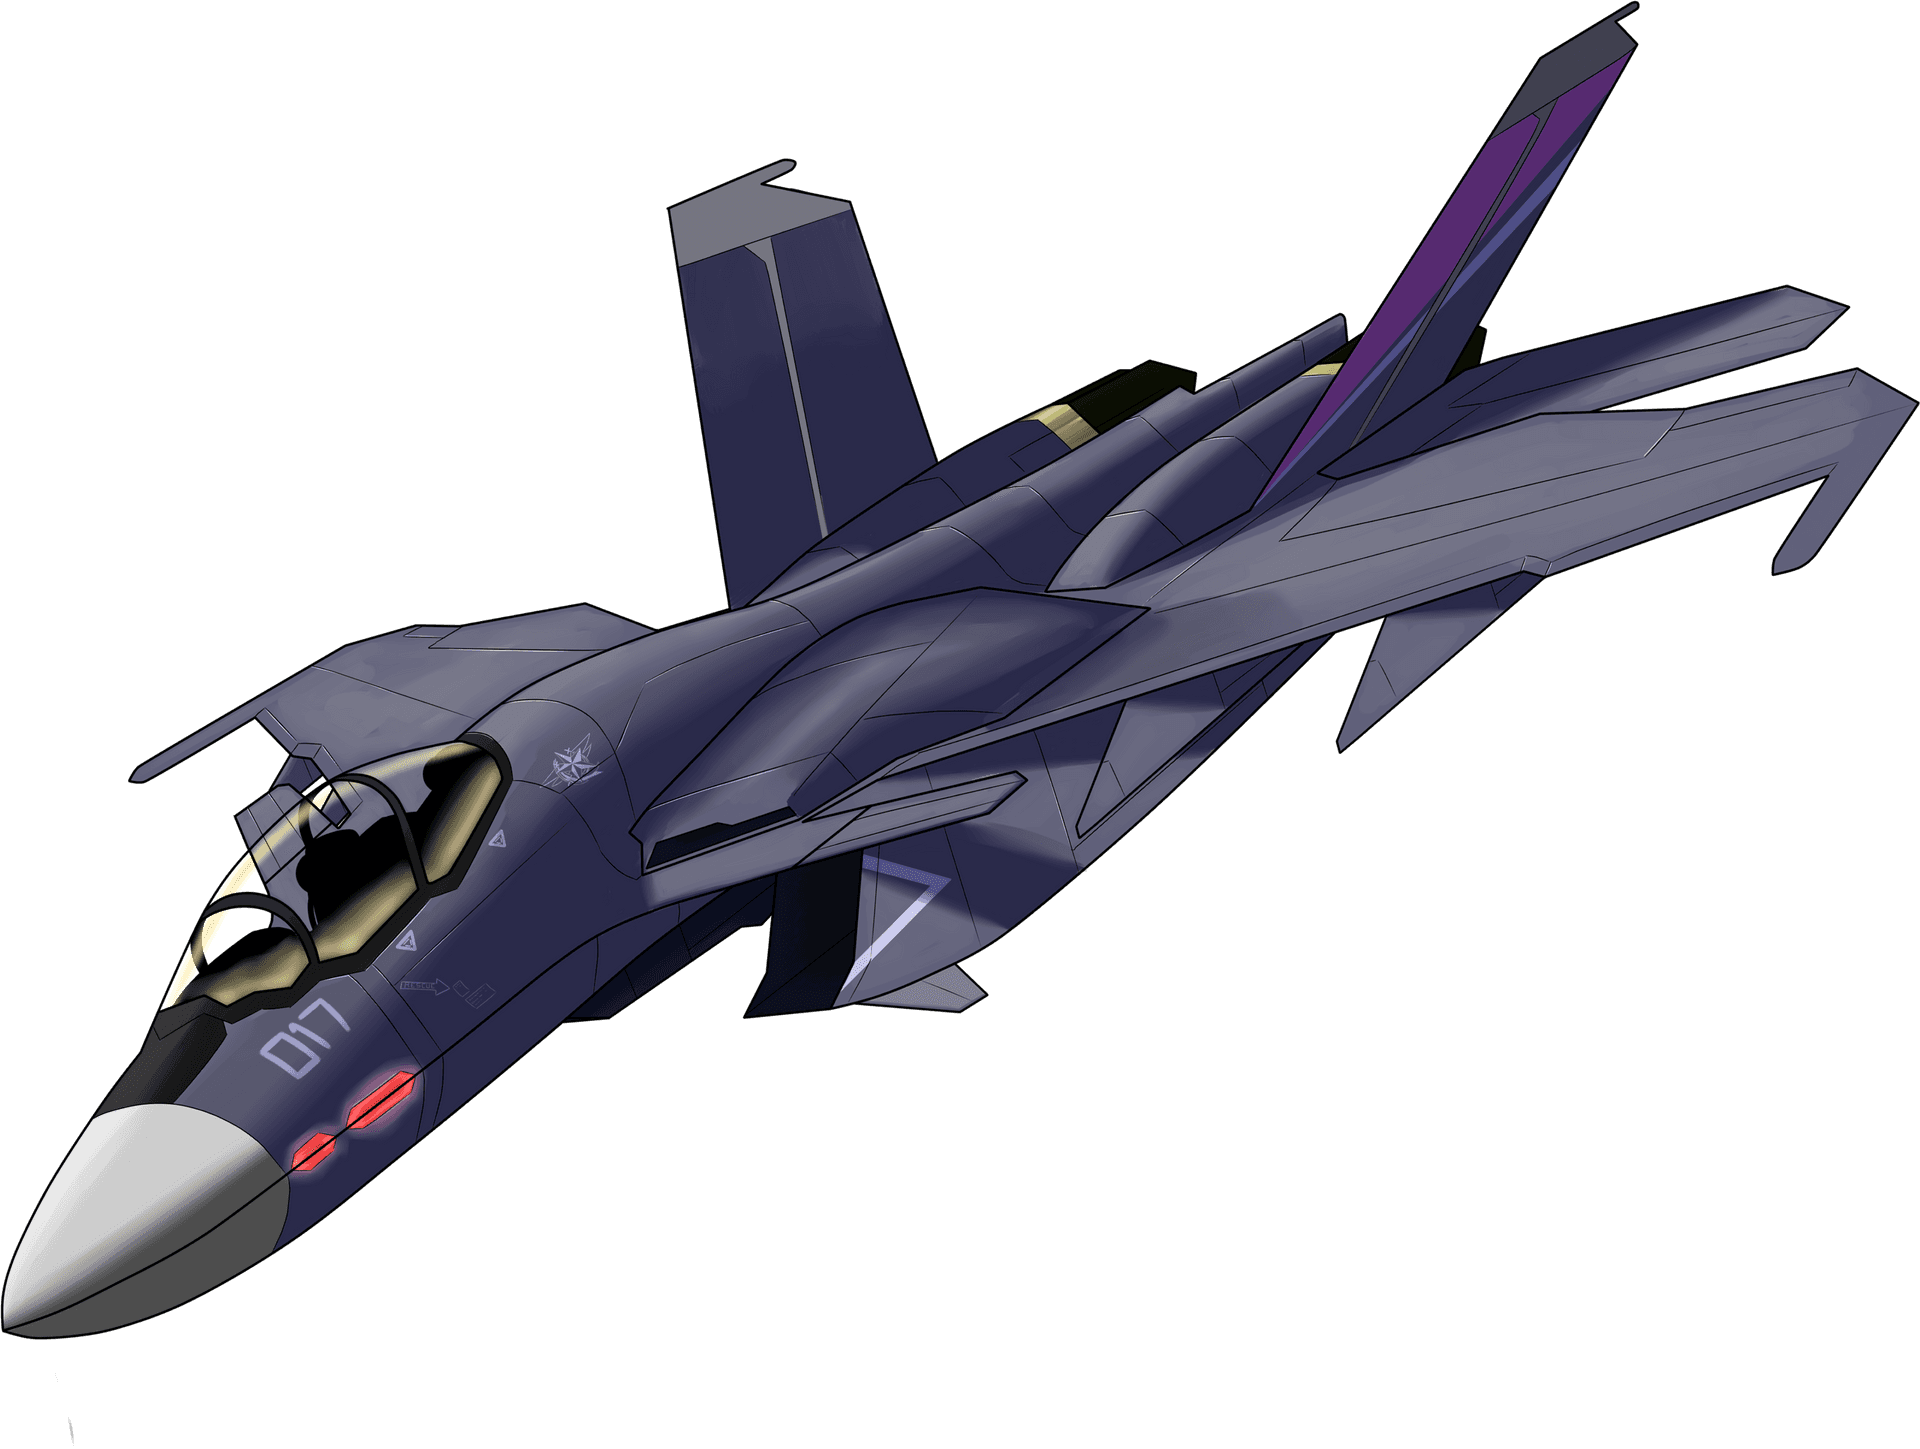 Futuristic Combat Jet Illustration PNG image